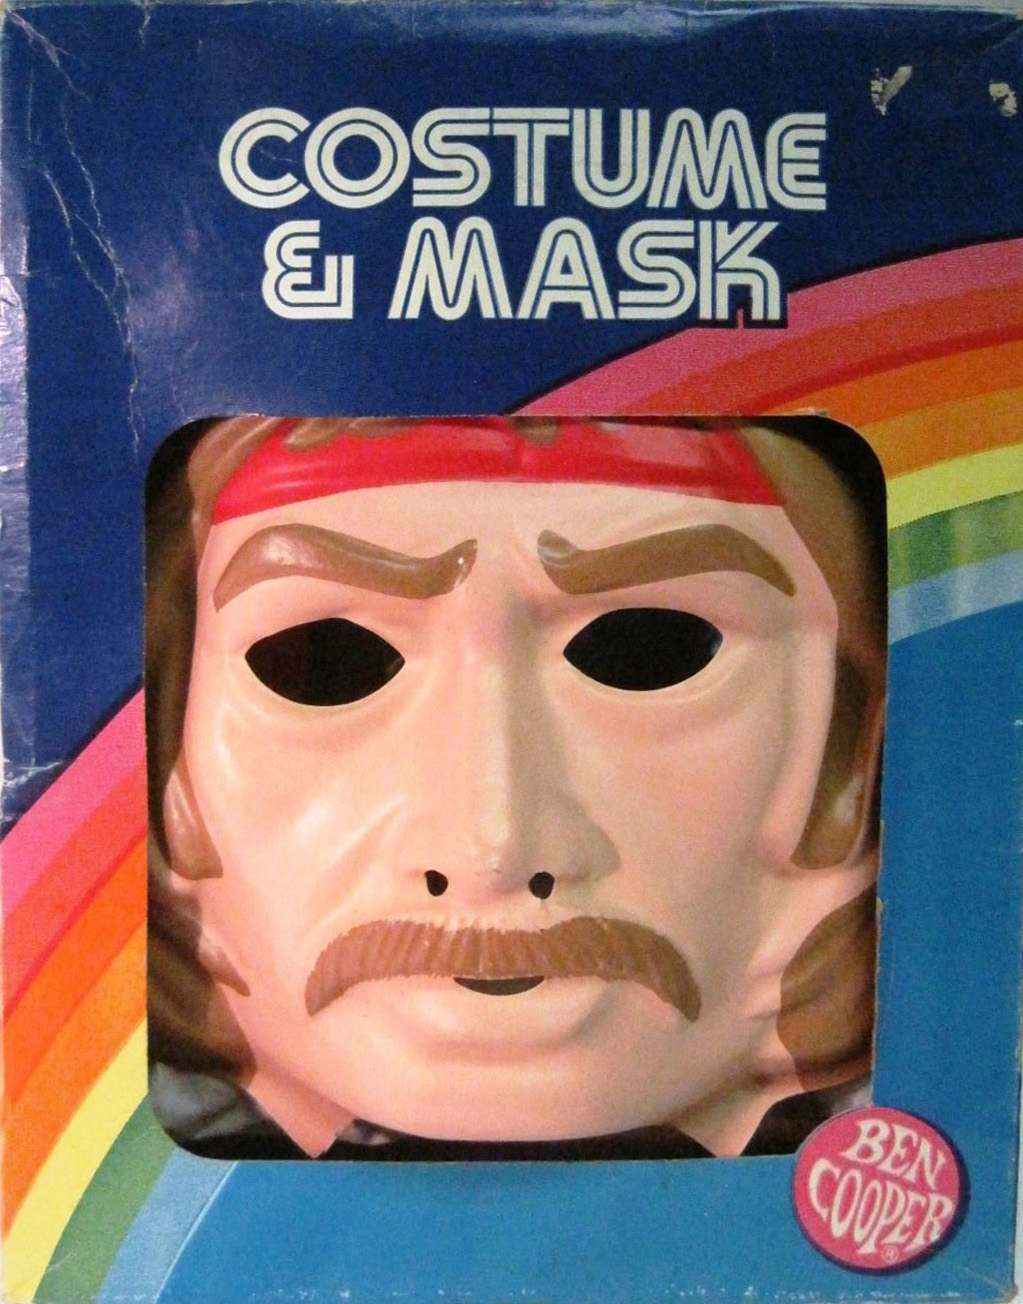 chuck norris mask - Costume & Mask Ben Cooper